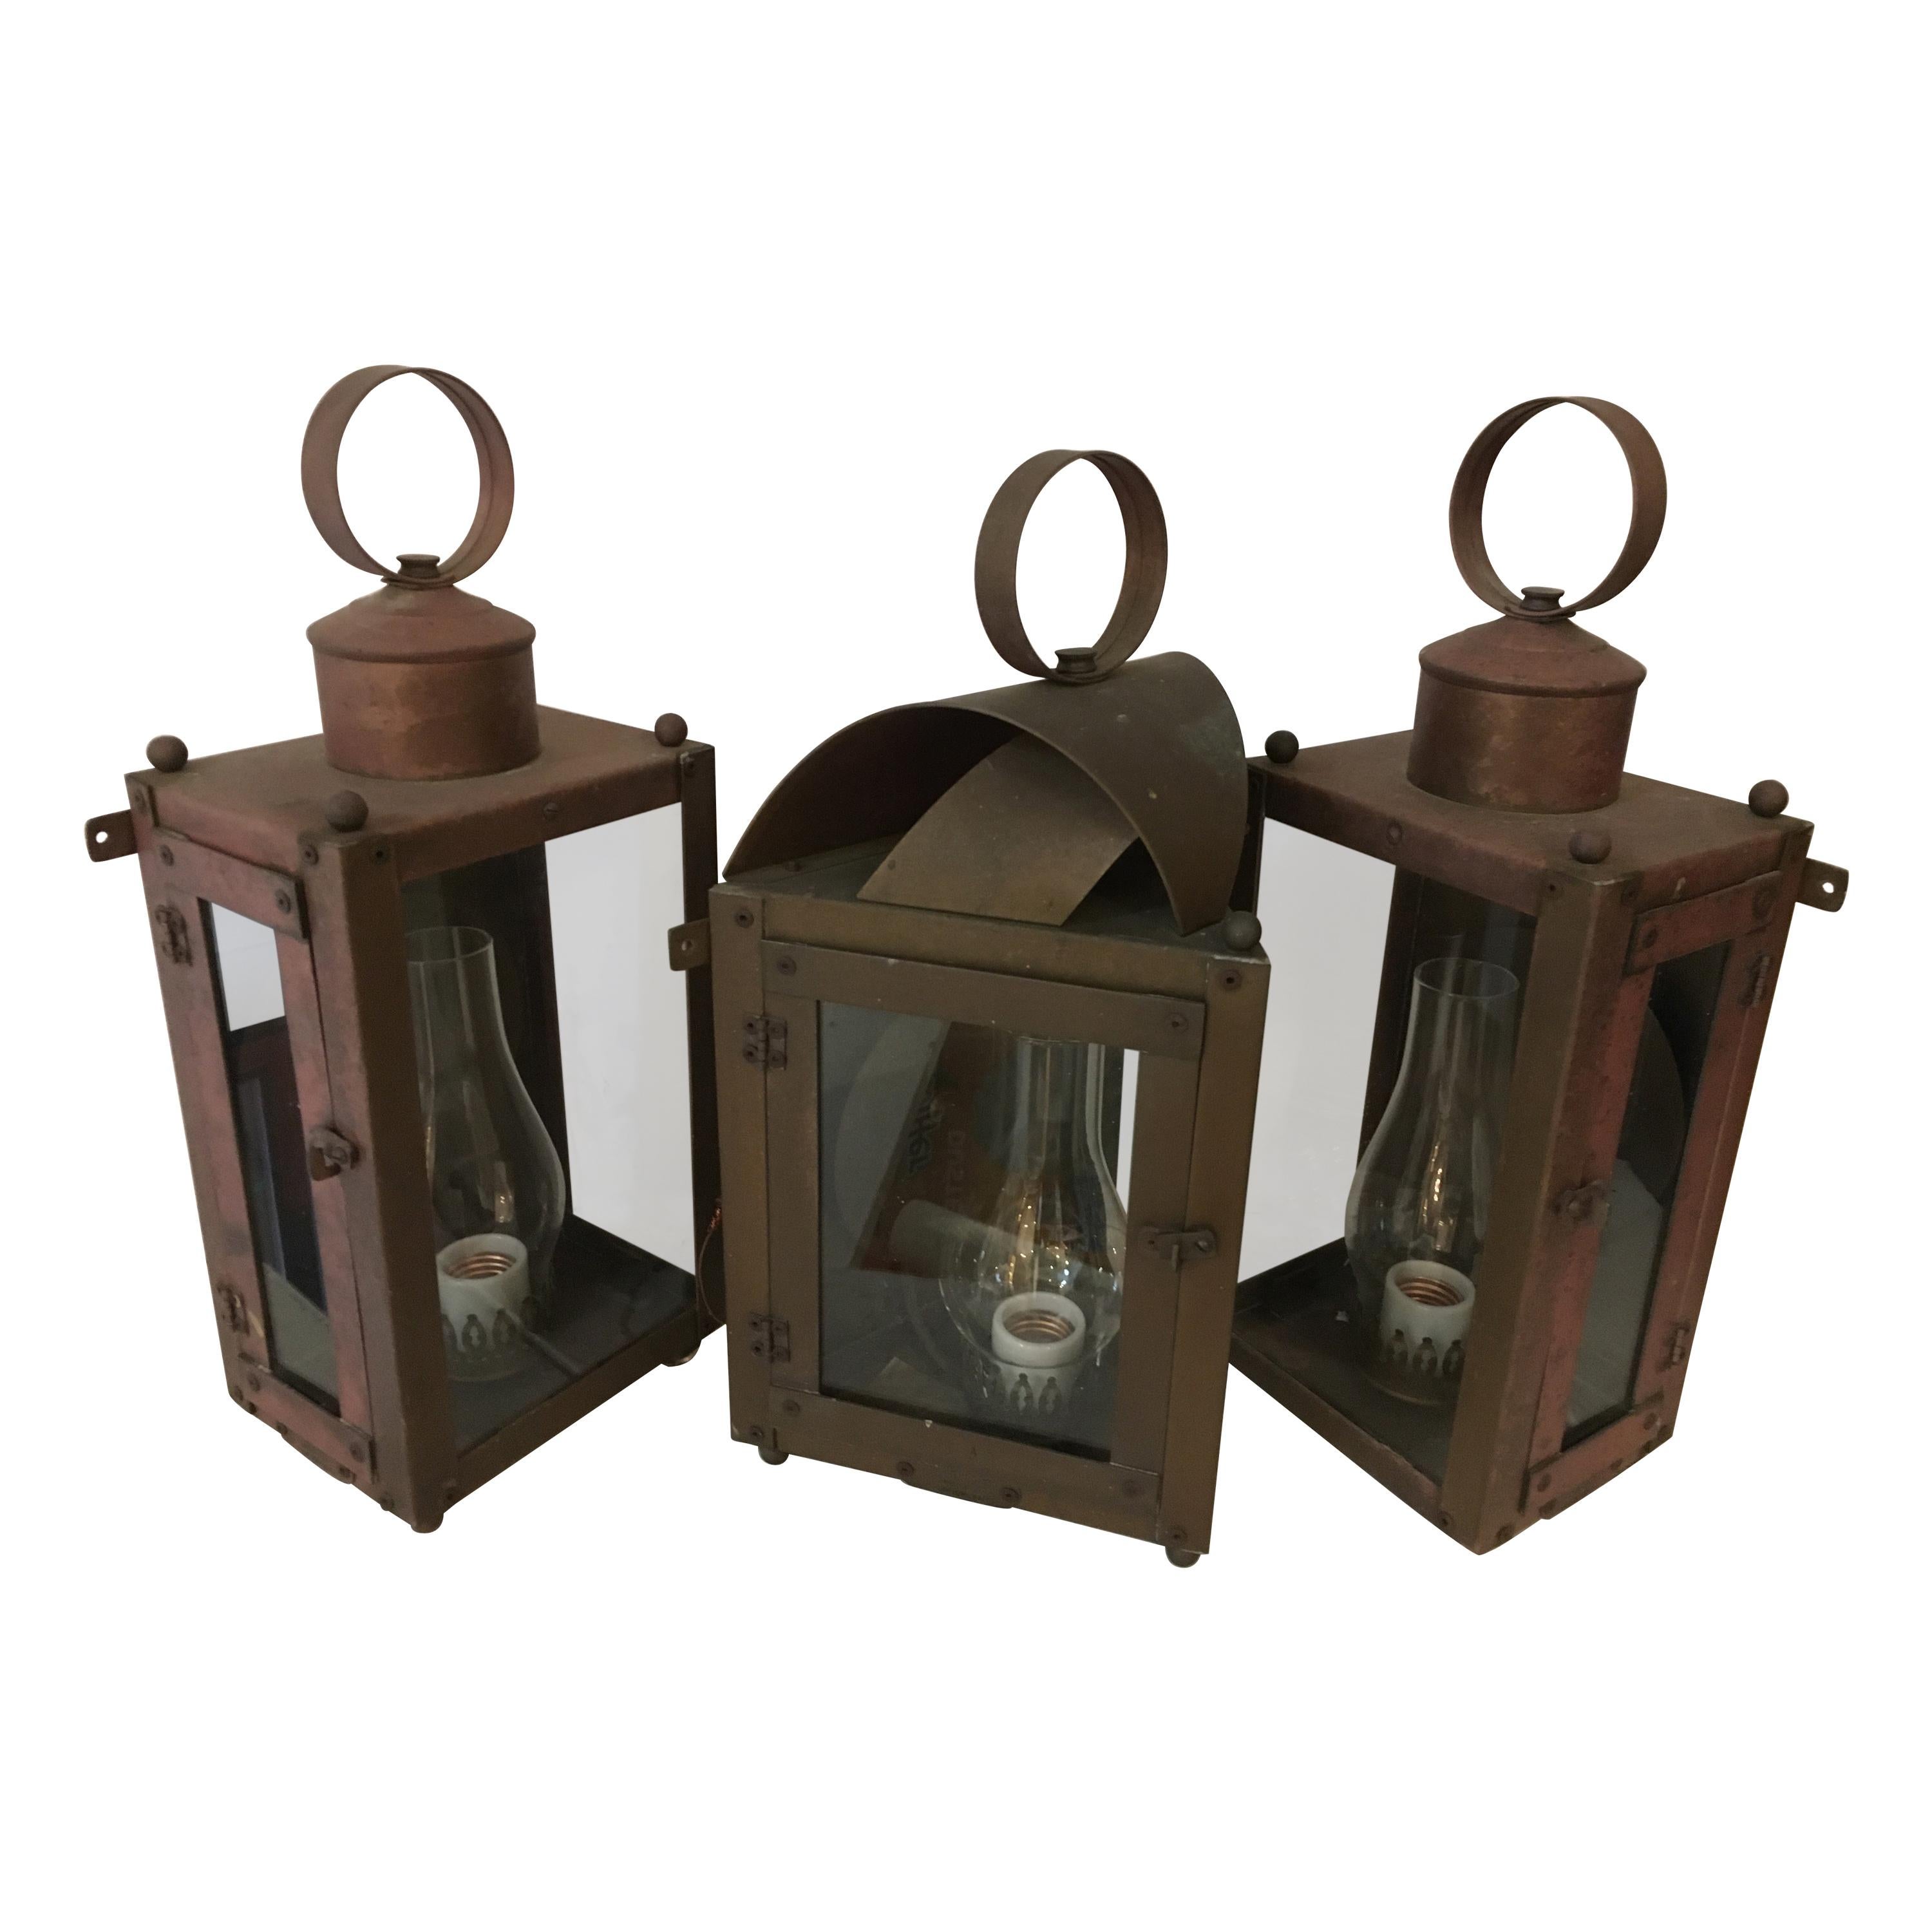 Trio of Brass and Copper Exterior Lantern Sconces